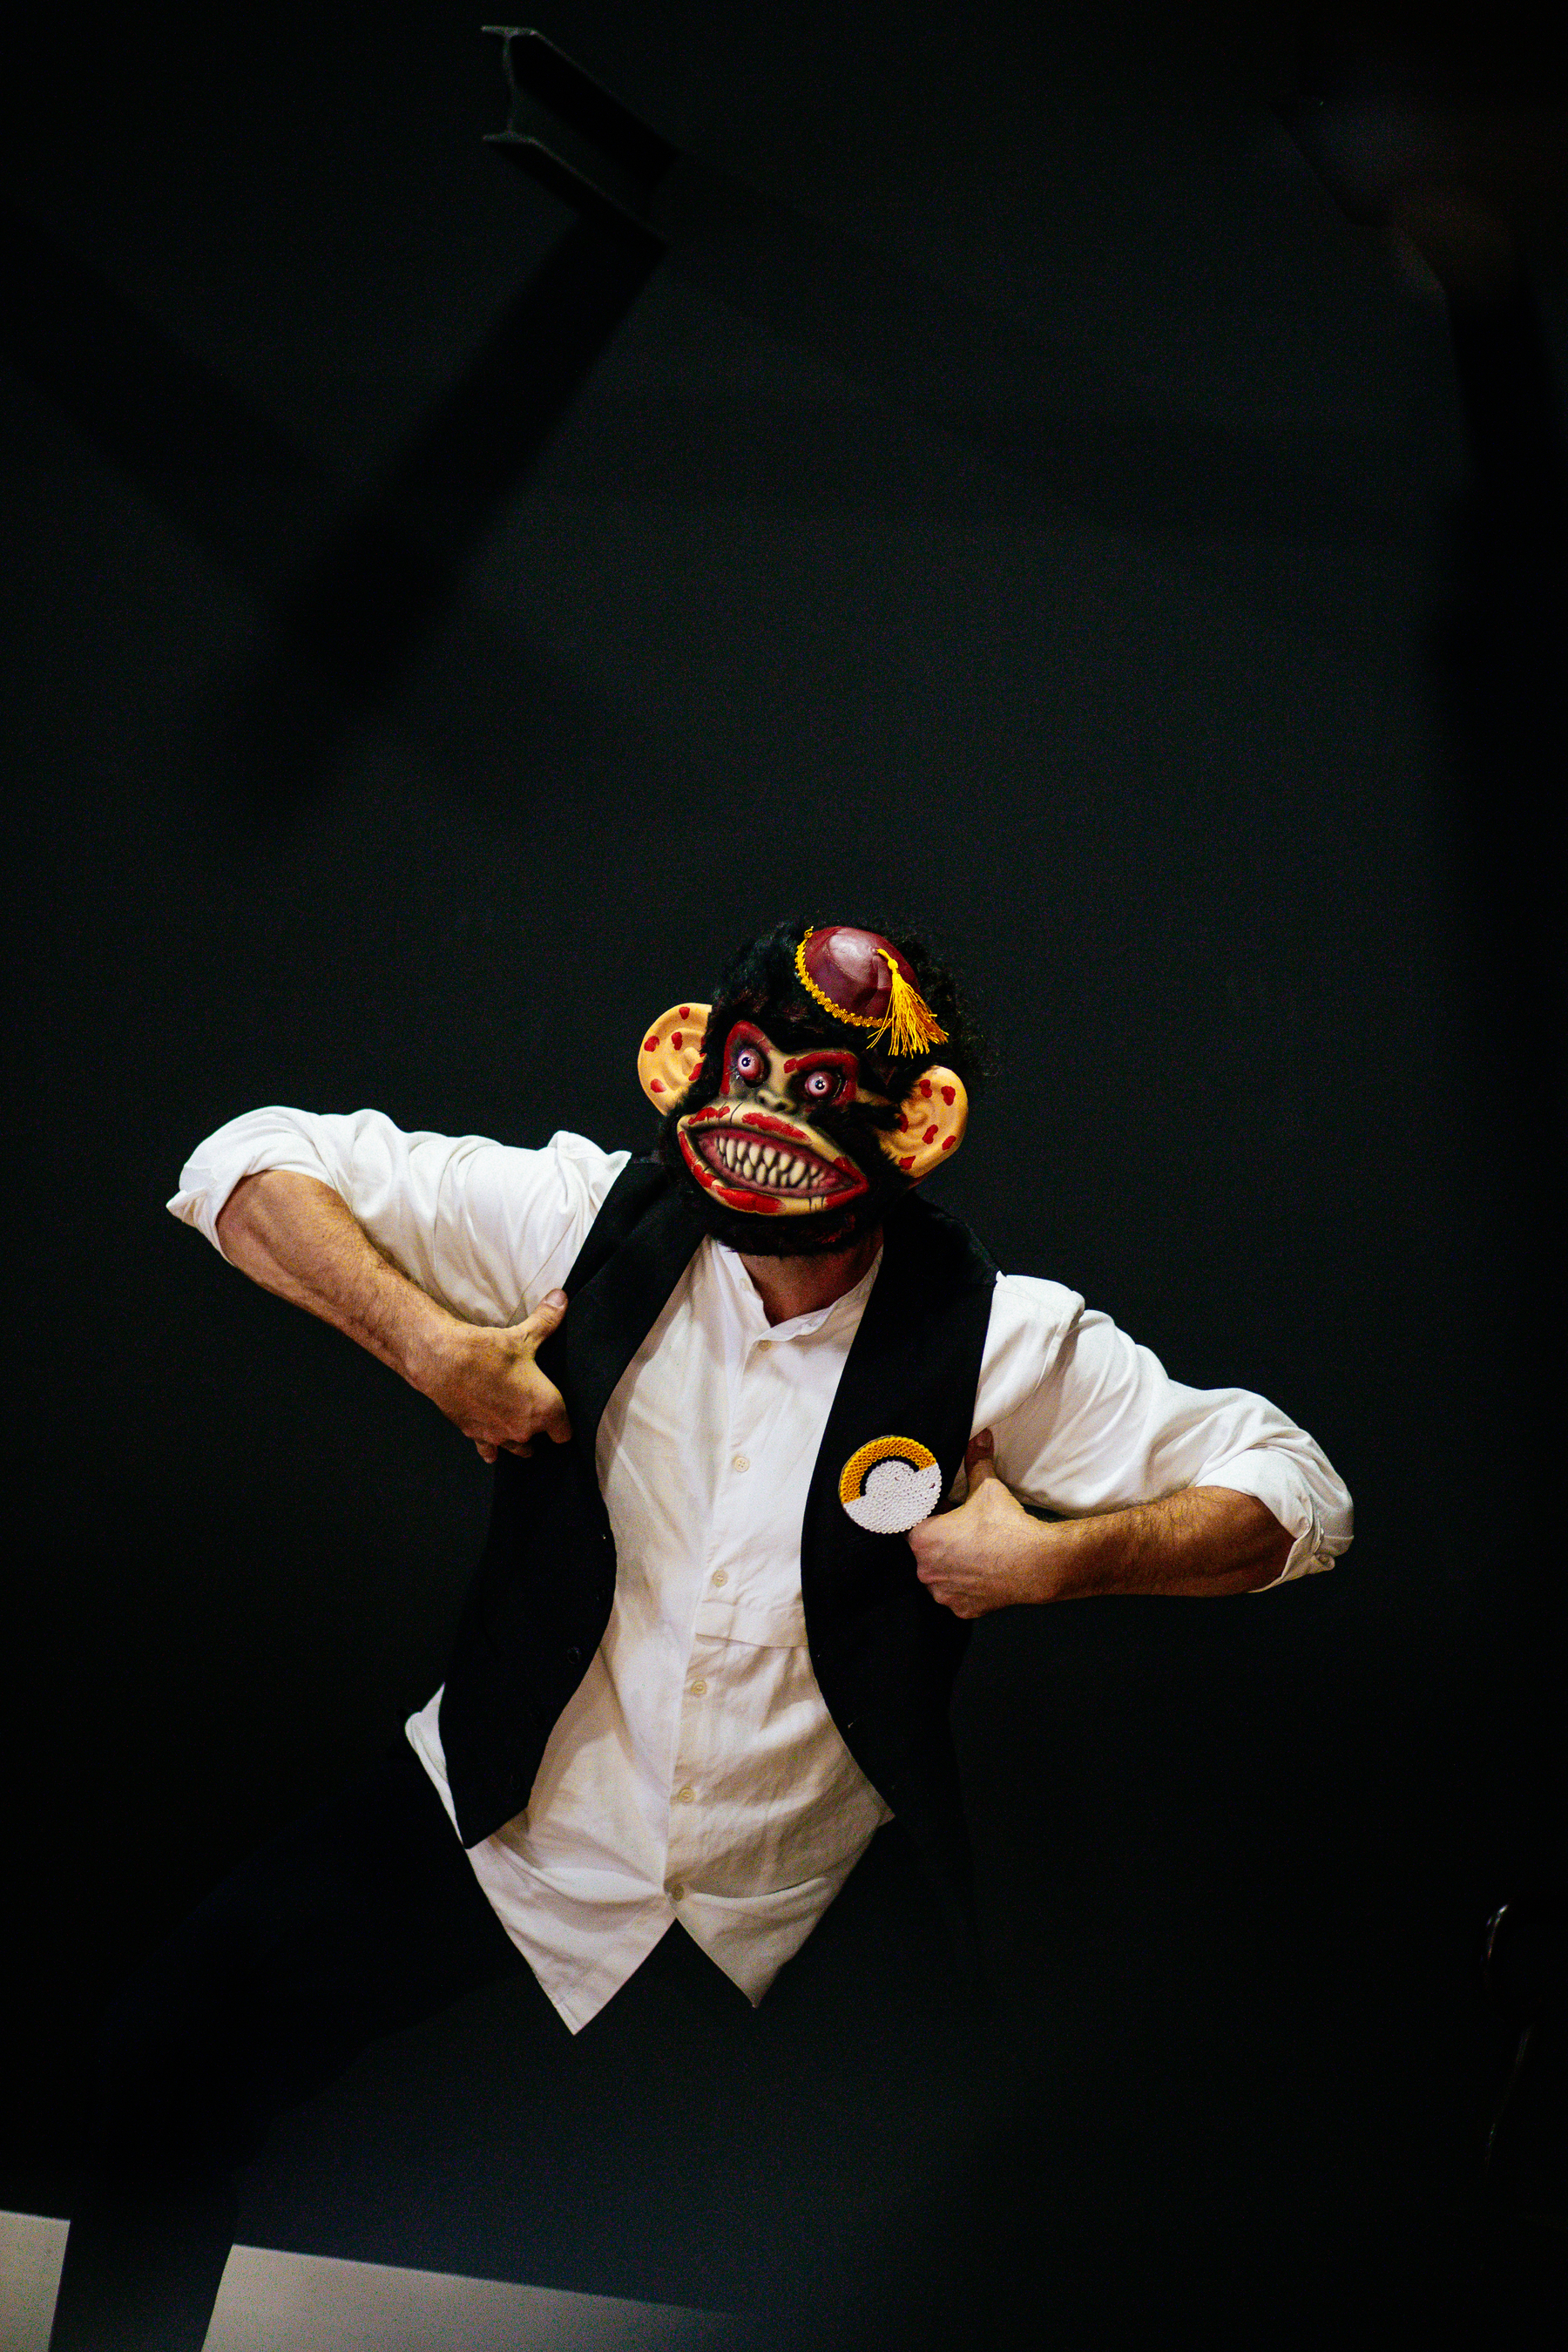 An artist dances around, dressed as a monkey.